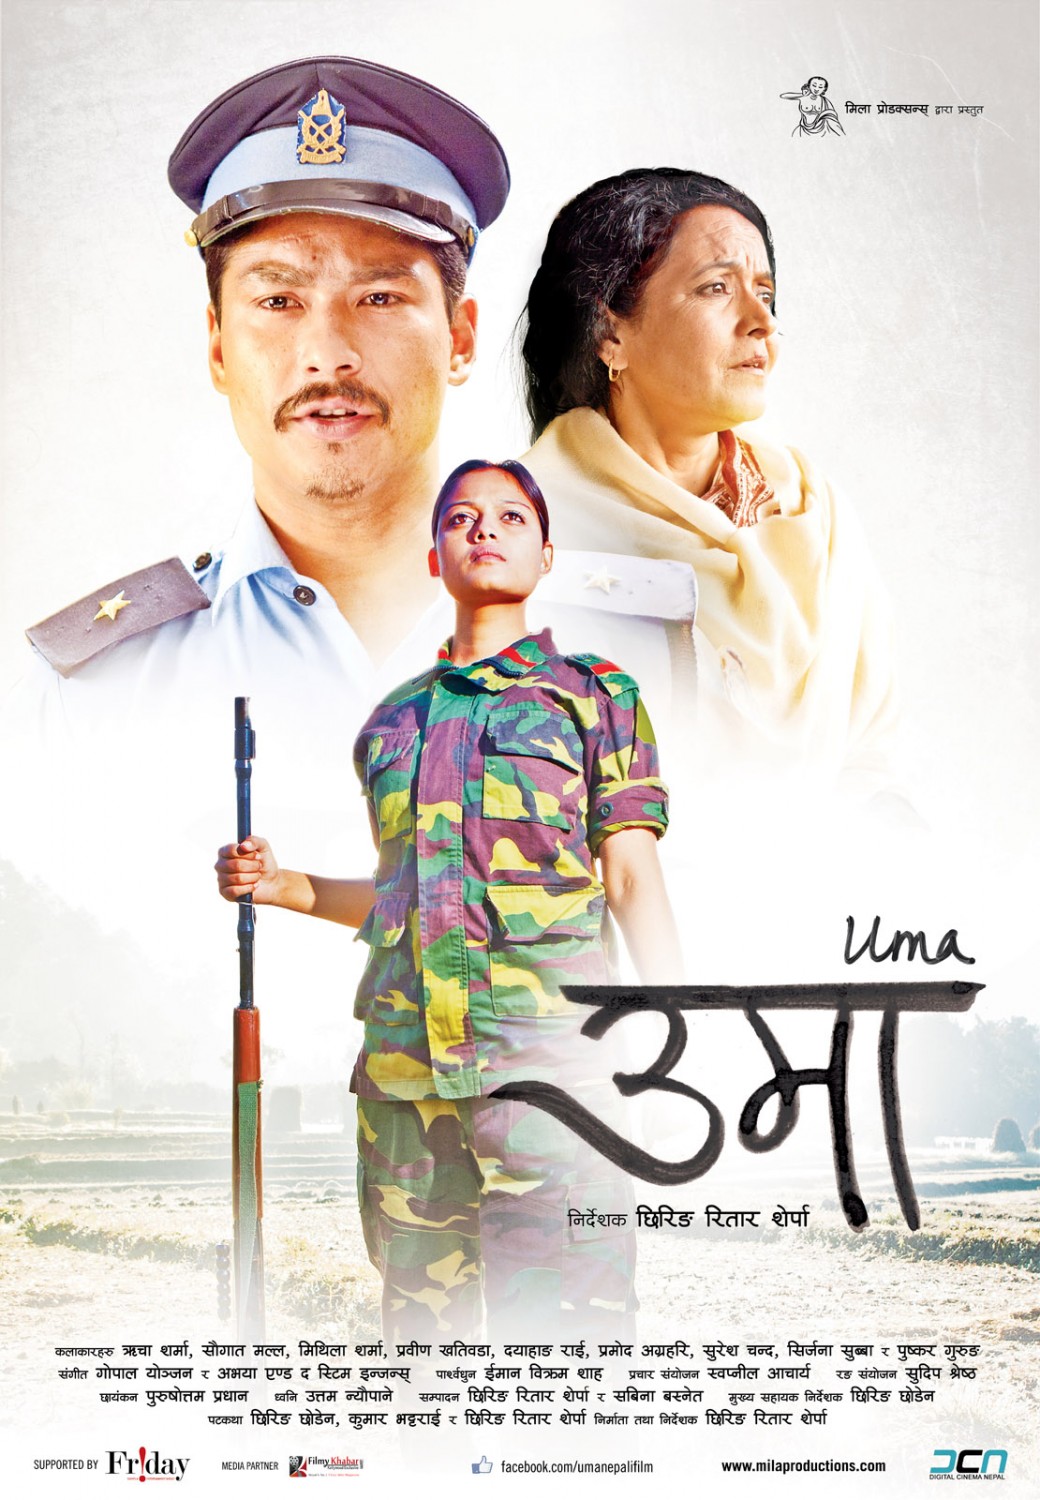 Extra Large Movie Poster Image for Uma (#2 of 3)